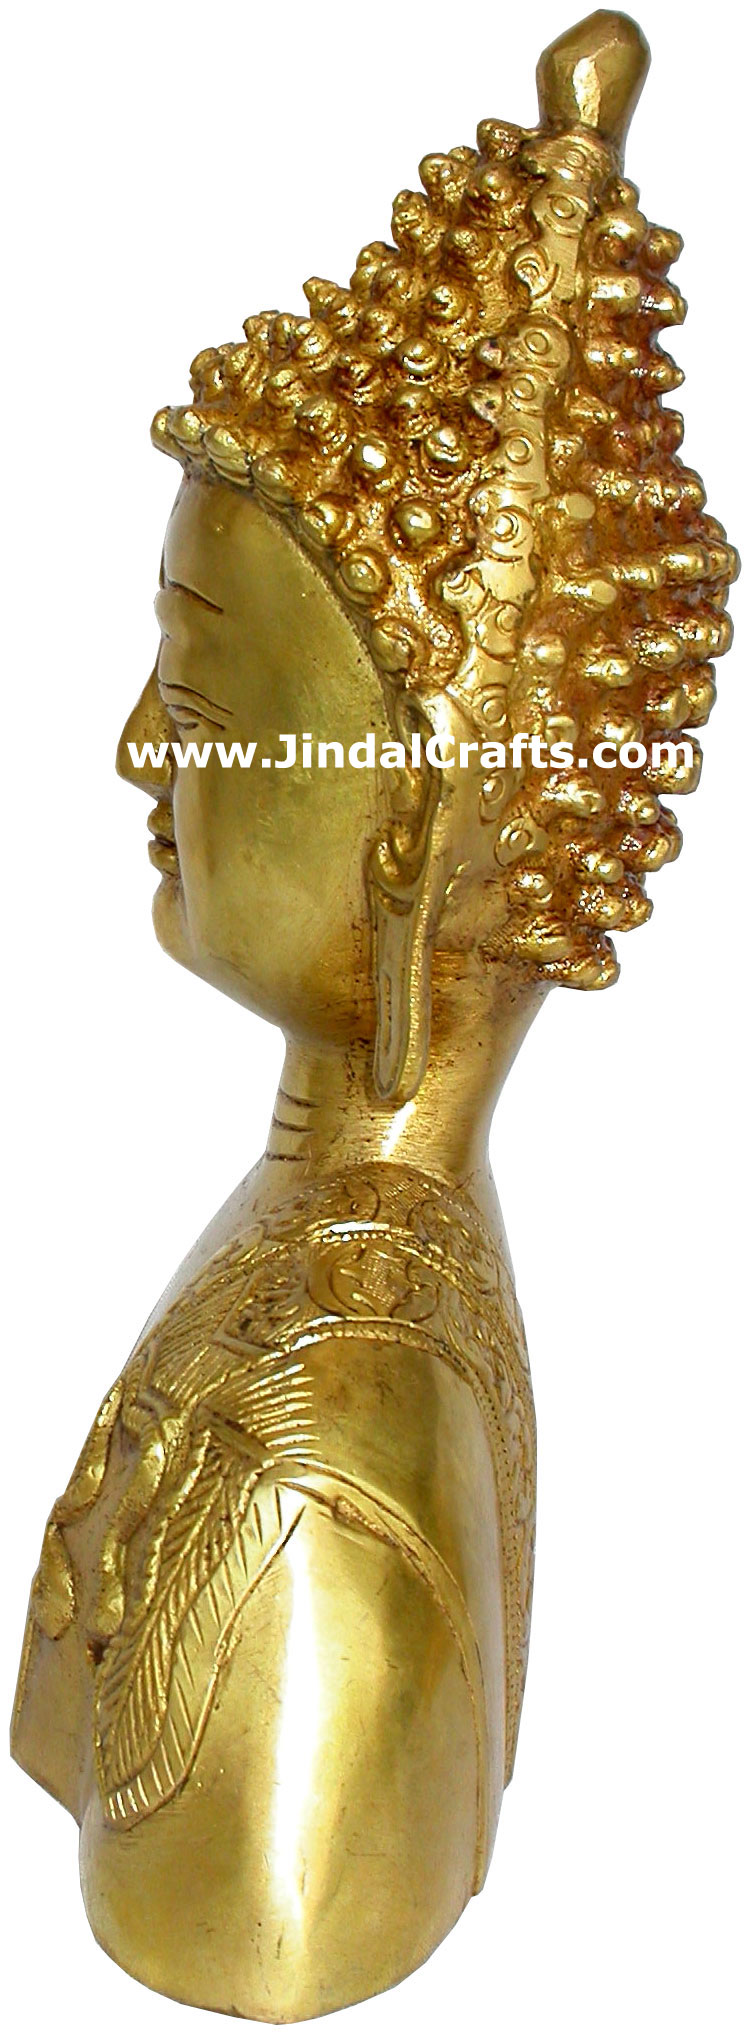 Buddha Bust - Hand Carved Indian Art Craft Handicraft Home Decor Brass Figurine